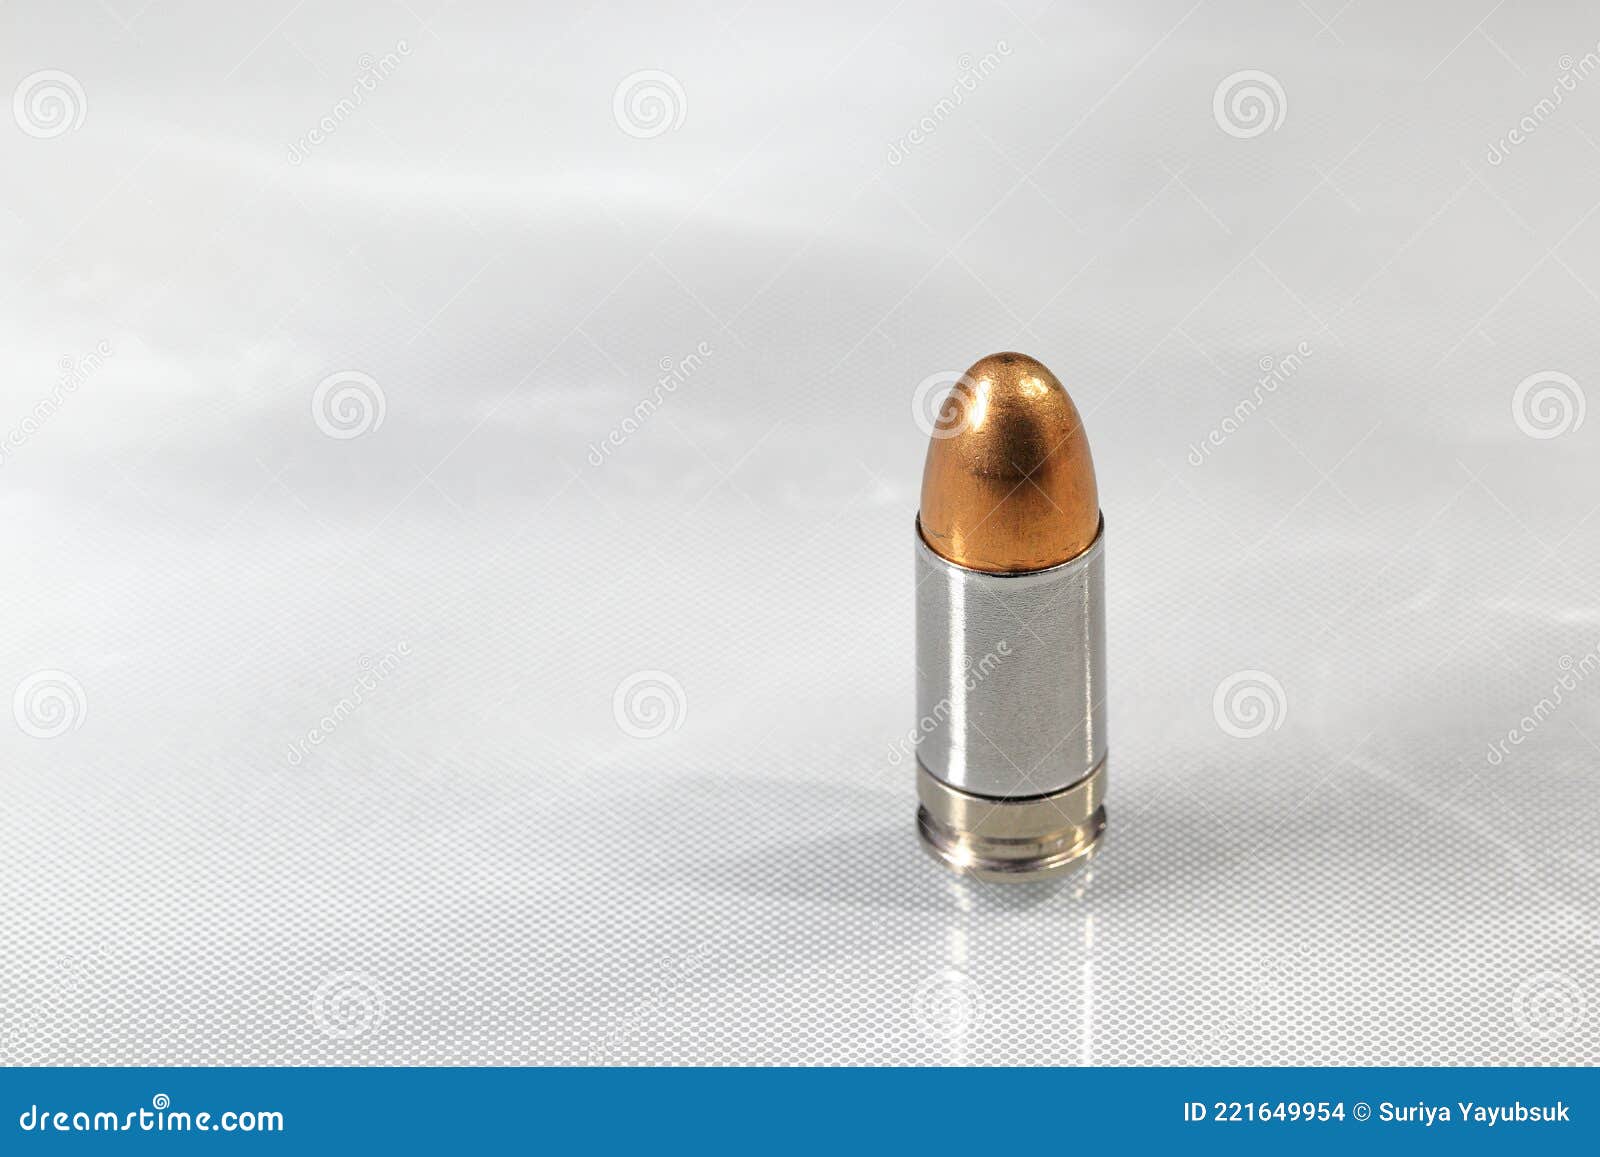 close up bullet 9mm parabellum fmj(full metal jacket )